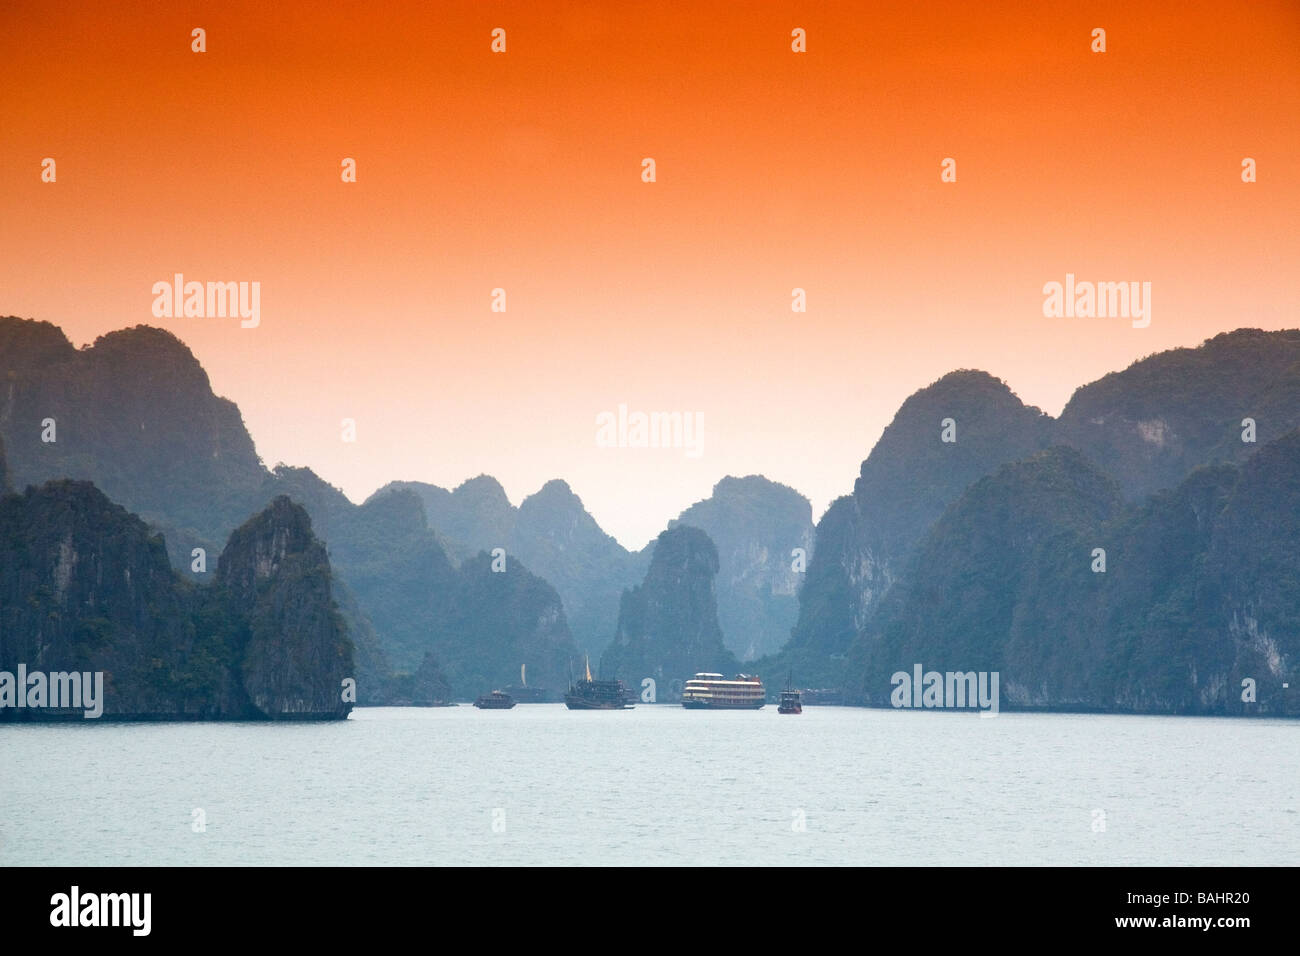 Misty mañana vistas de la bahía de Ha Long, Vietnam Foto de stock